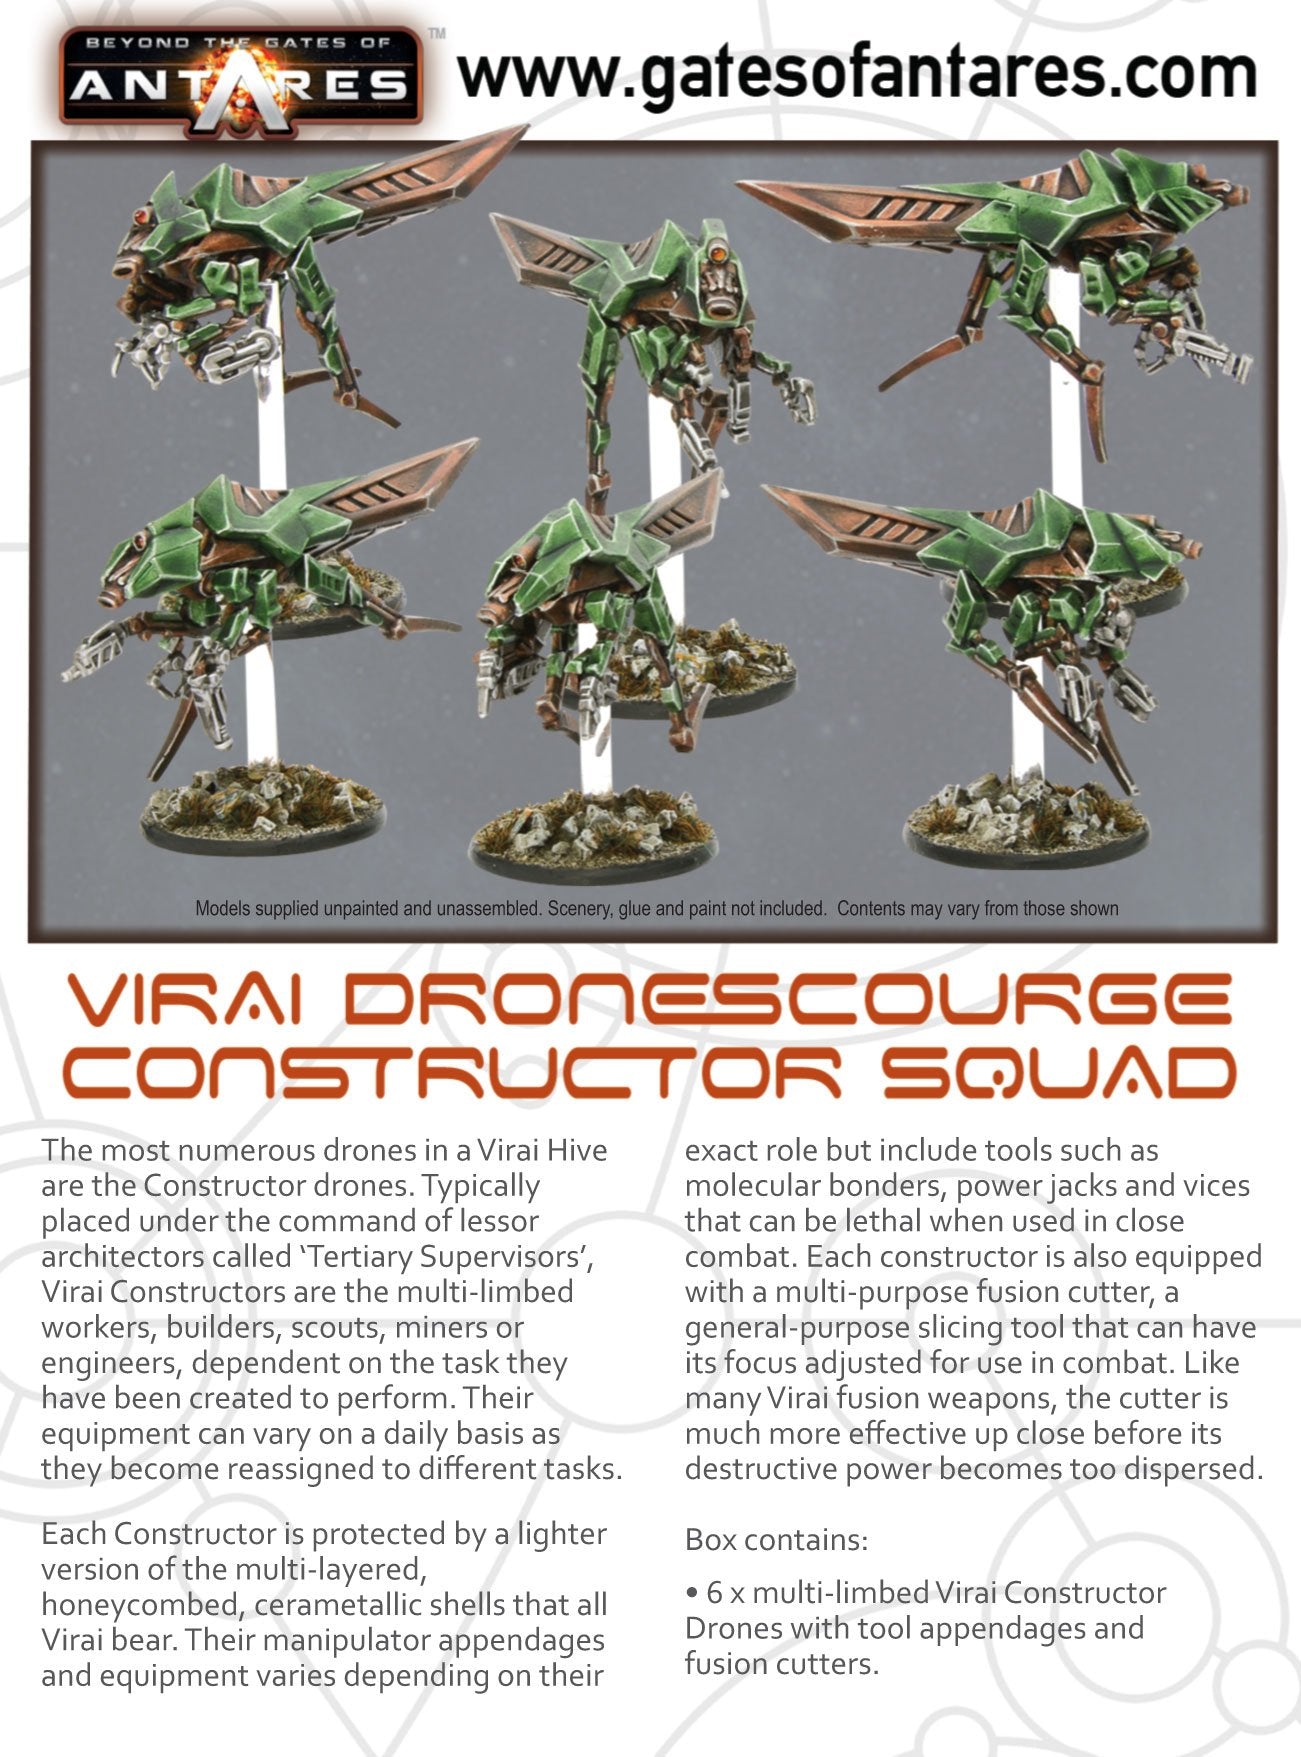 Virai Dronescourge Constructor squad